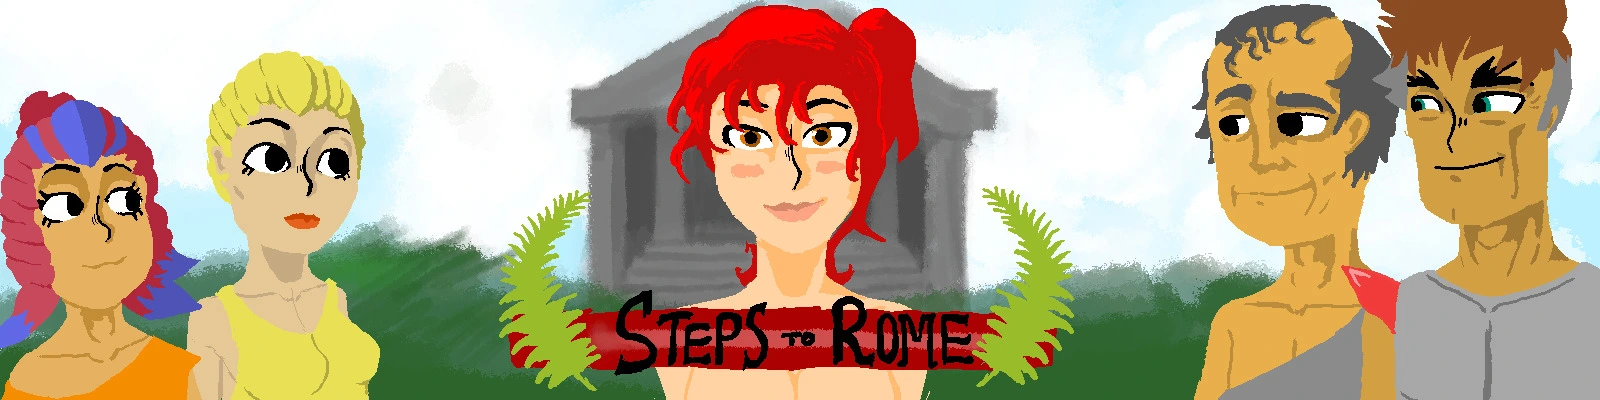 Steps to Rome [v0.1] main image